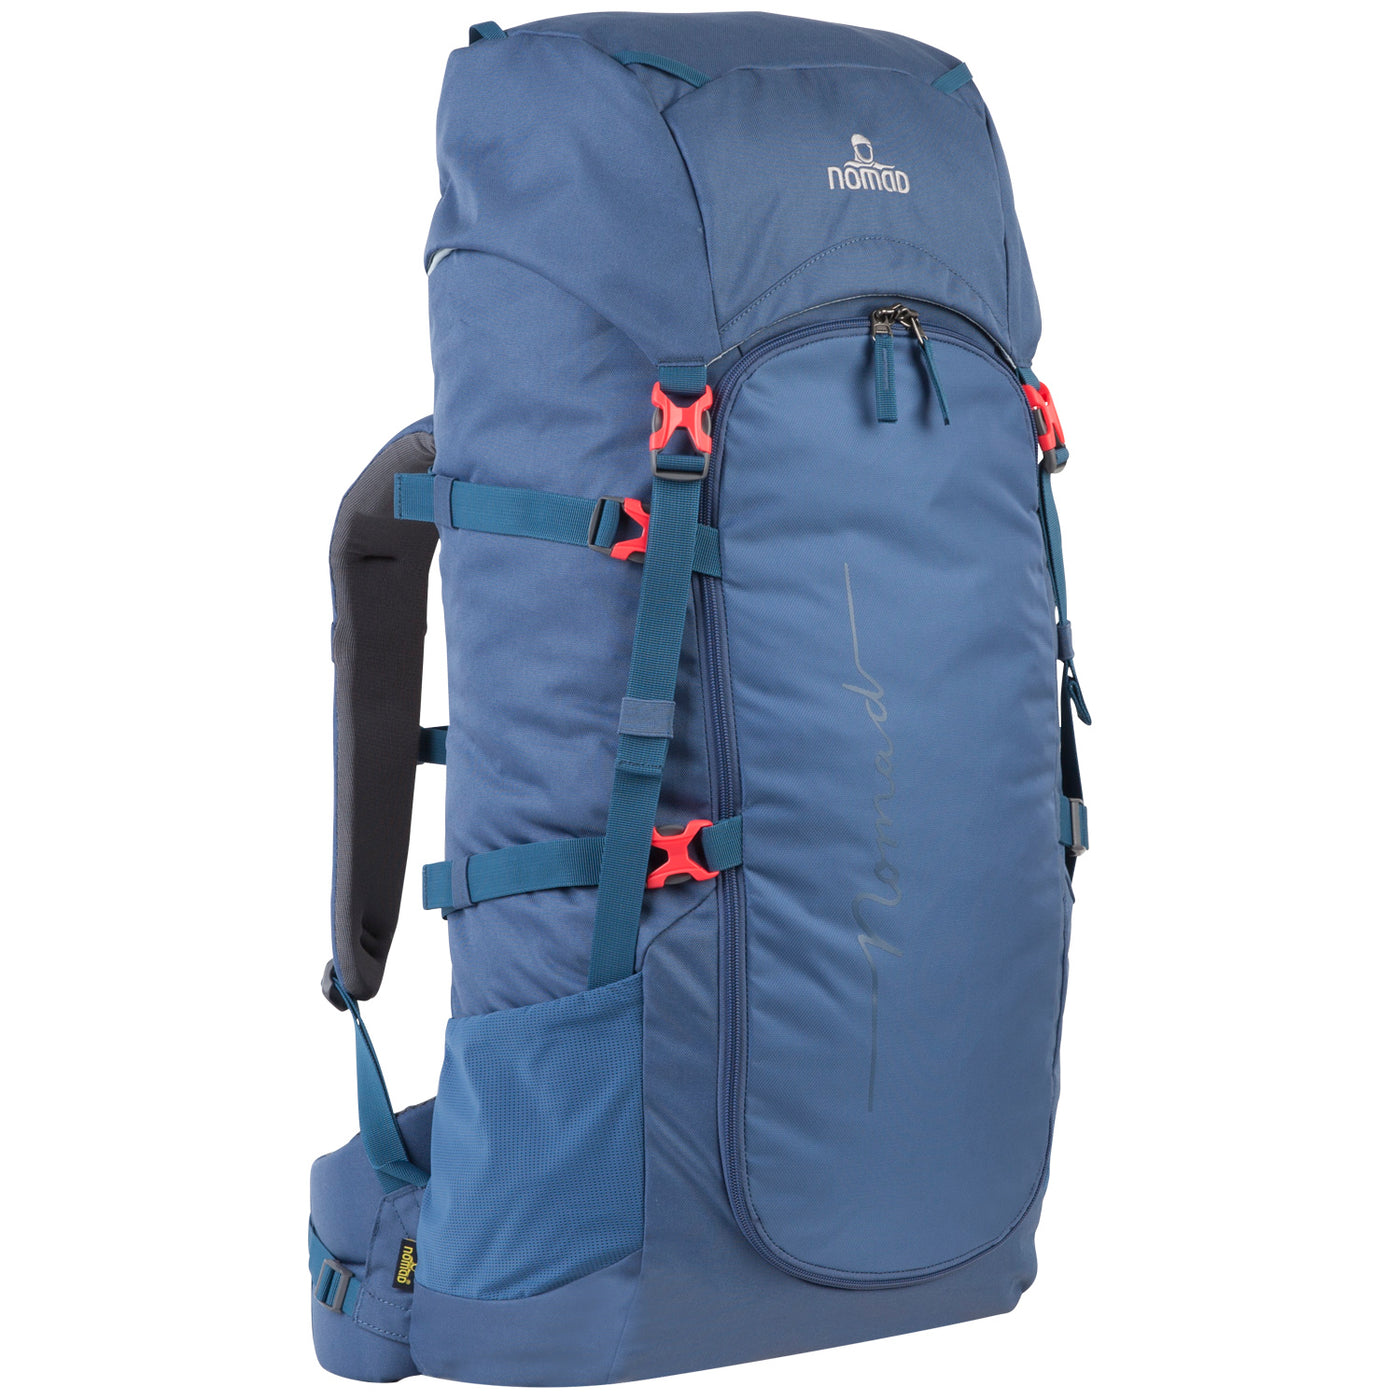 Premium SF 60 Backpack – Nomad